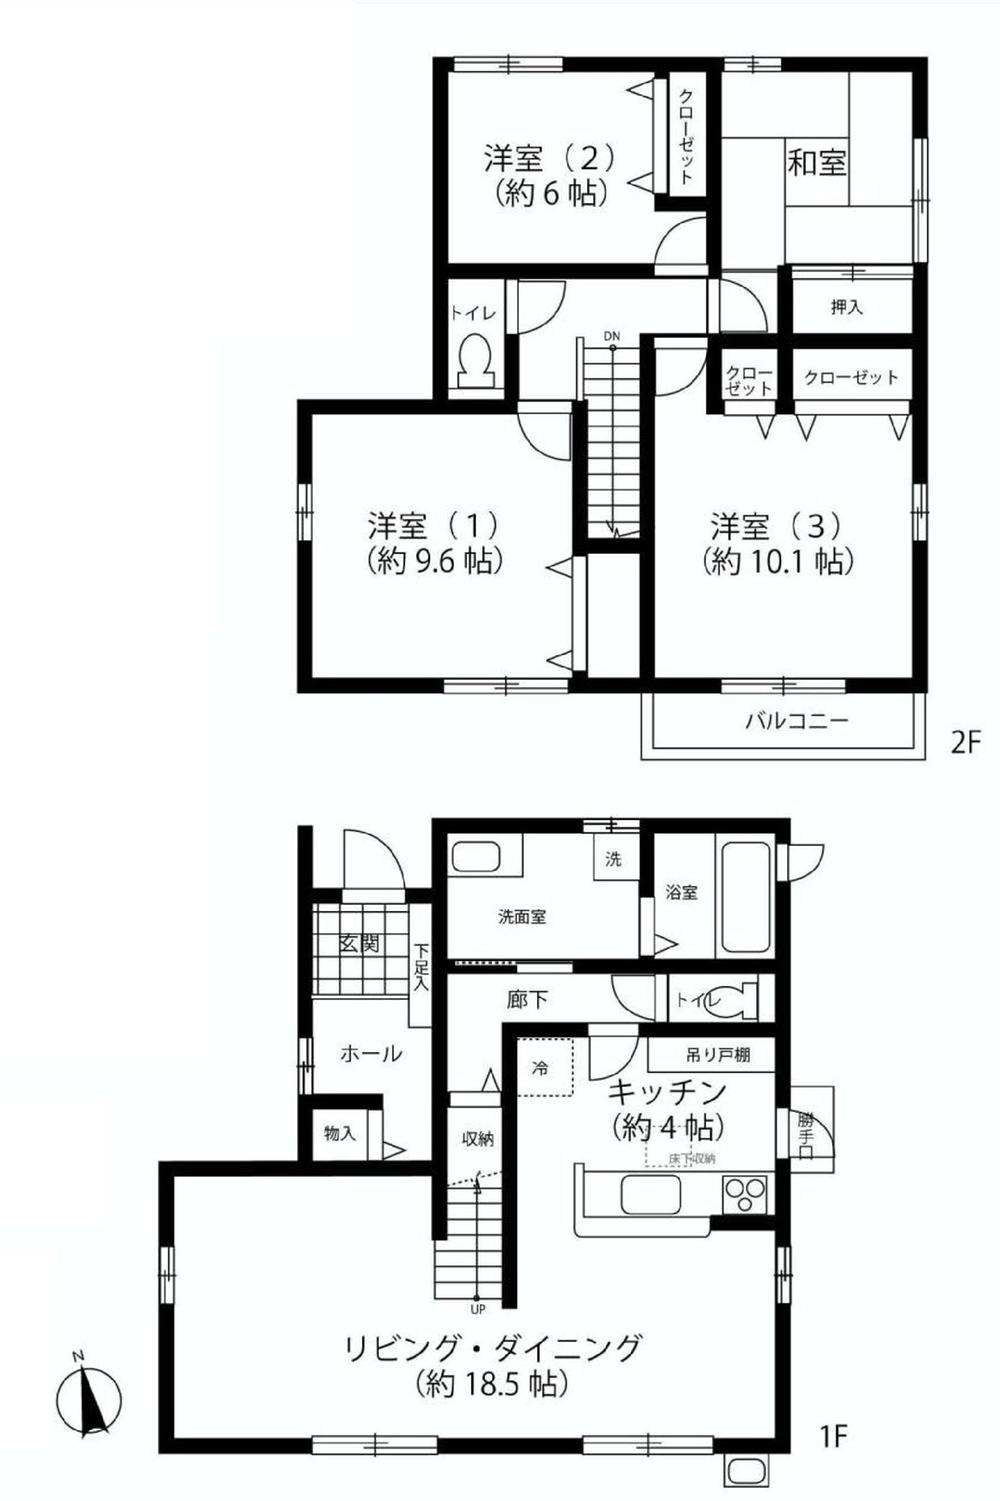 Floor plan. 37,800,000 yen, 4LDK, Land area 139.96 sq m , Building area 117.9 sq m